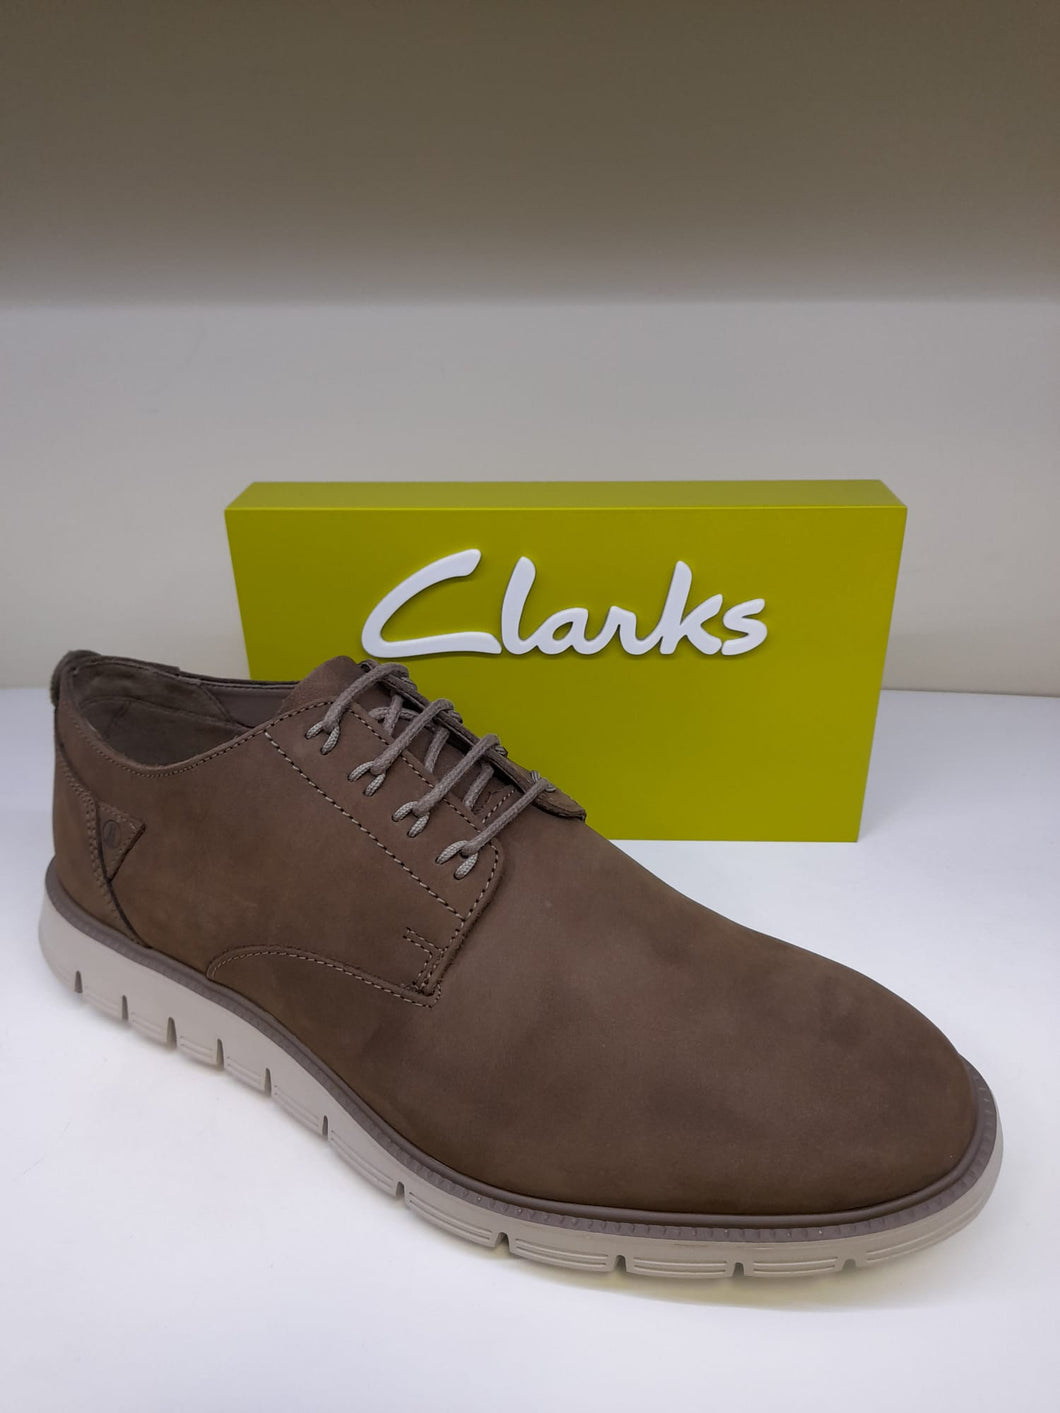 Clarks Men's Track Flex Path Pebble Nubuck Comfort Shoe - Laced